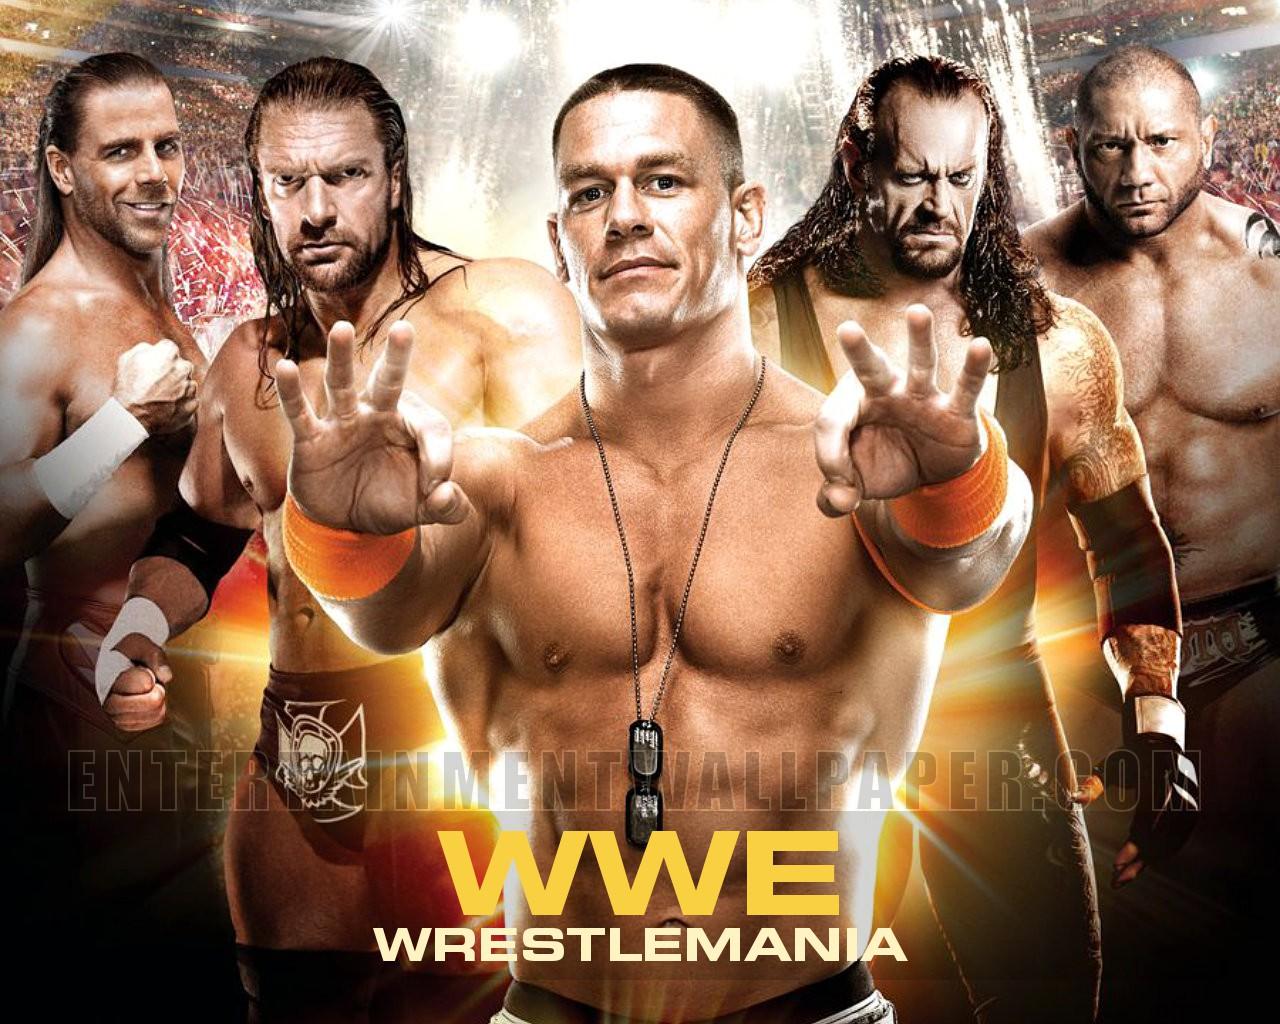 WWE image WWE Wrestlemania HD wallpaper and background photo